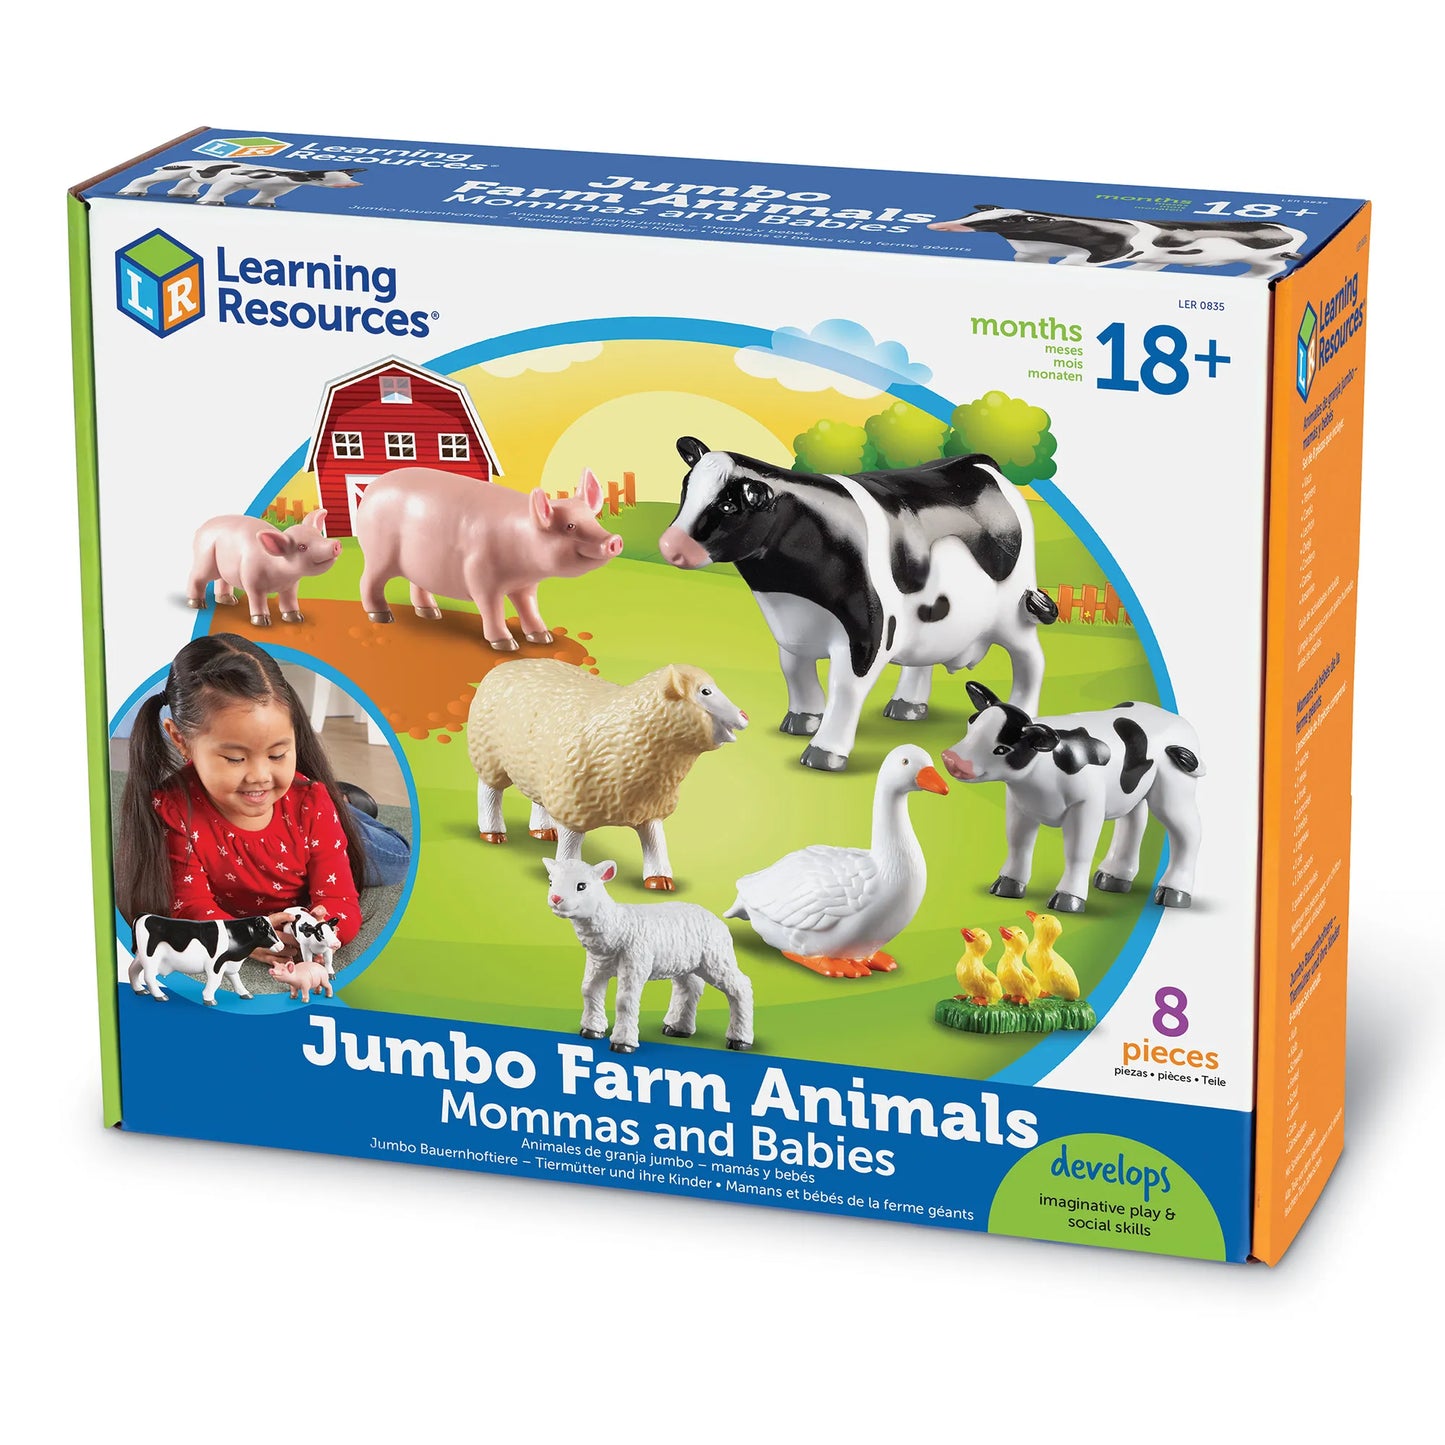 Learning Resources Jumbo Farm Animals Mommas & Babies